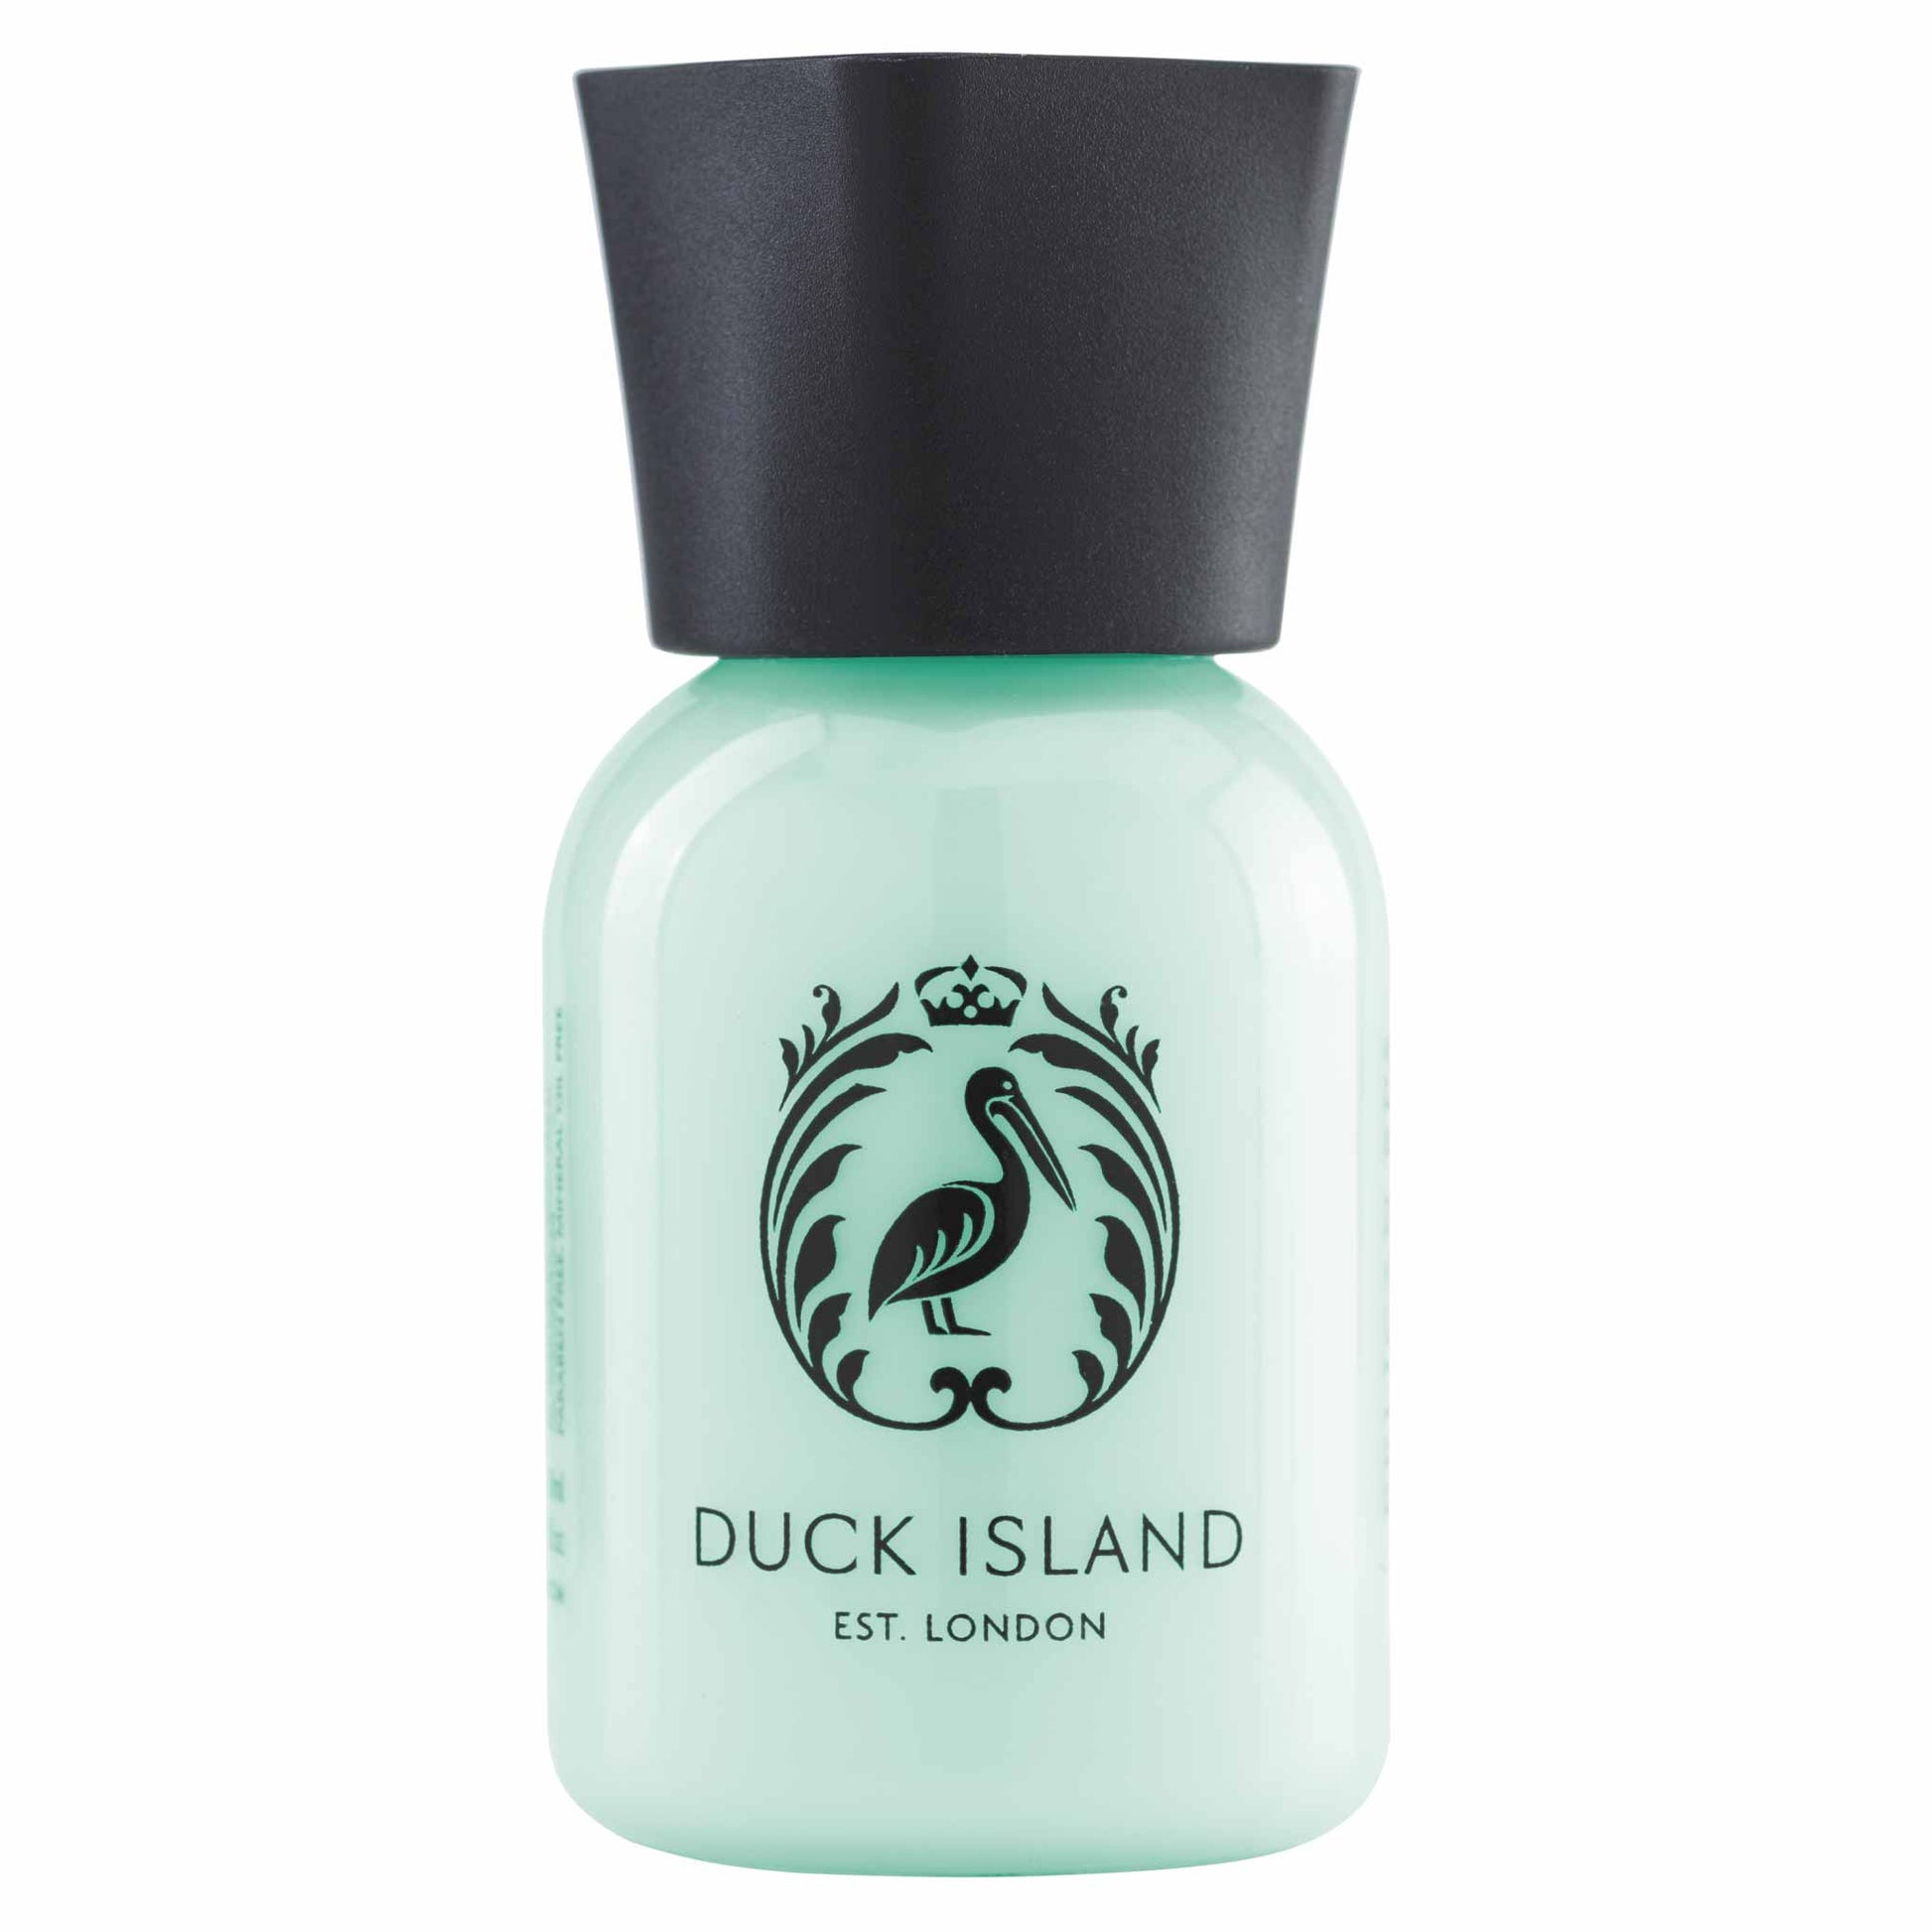 Duck Island Pelican Spa conditioner in miniature 30ml bottle